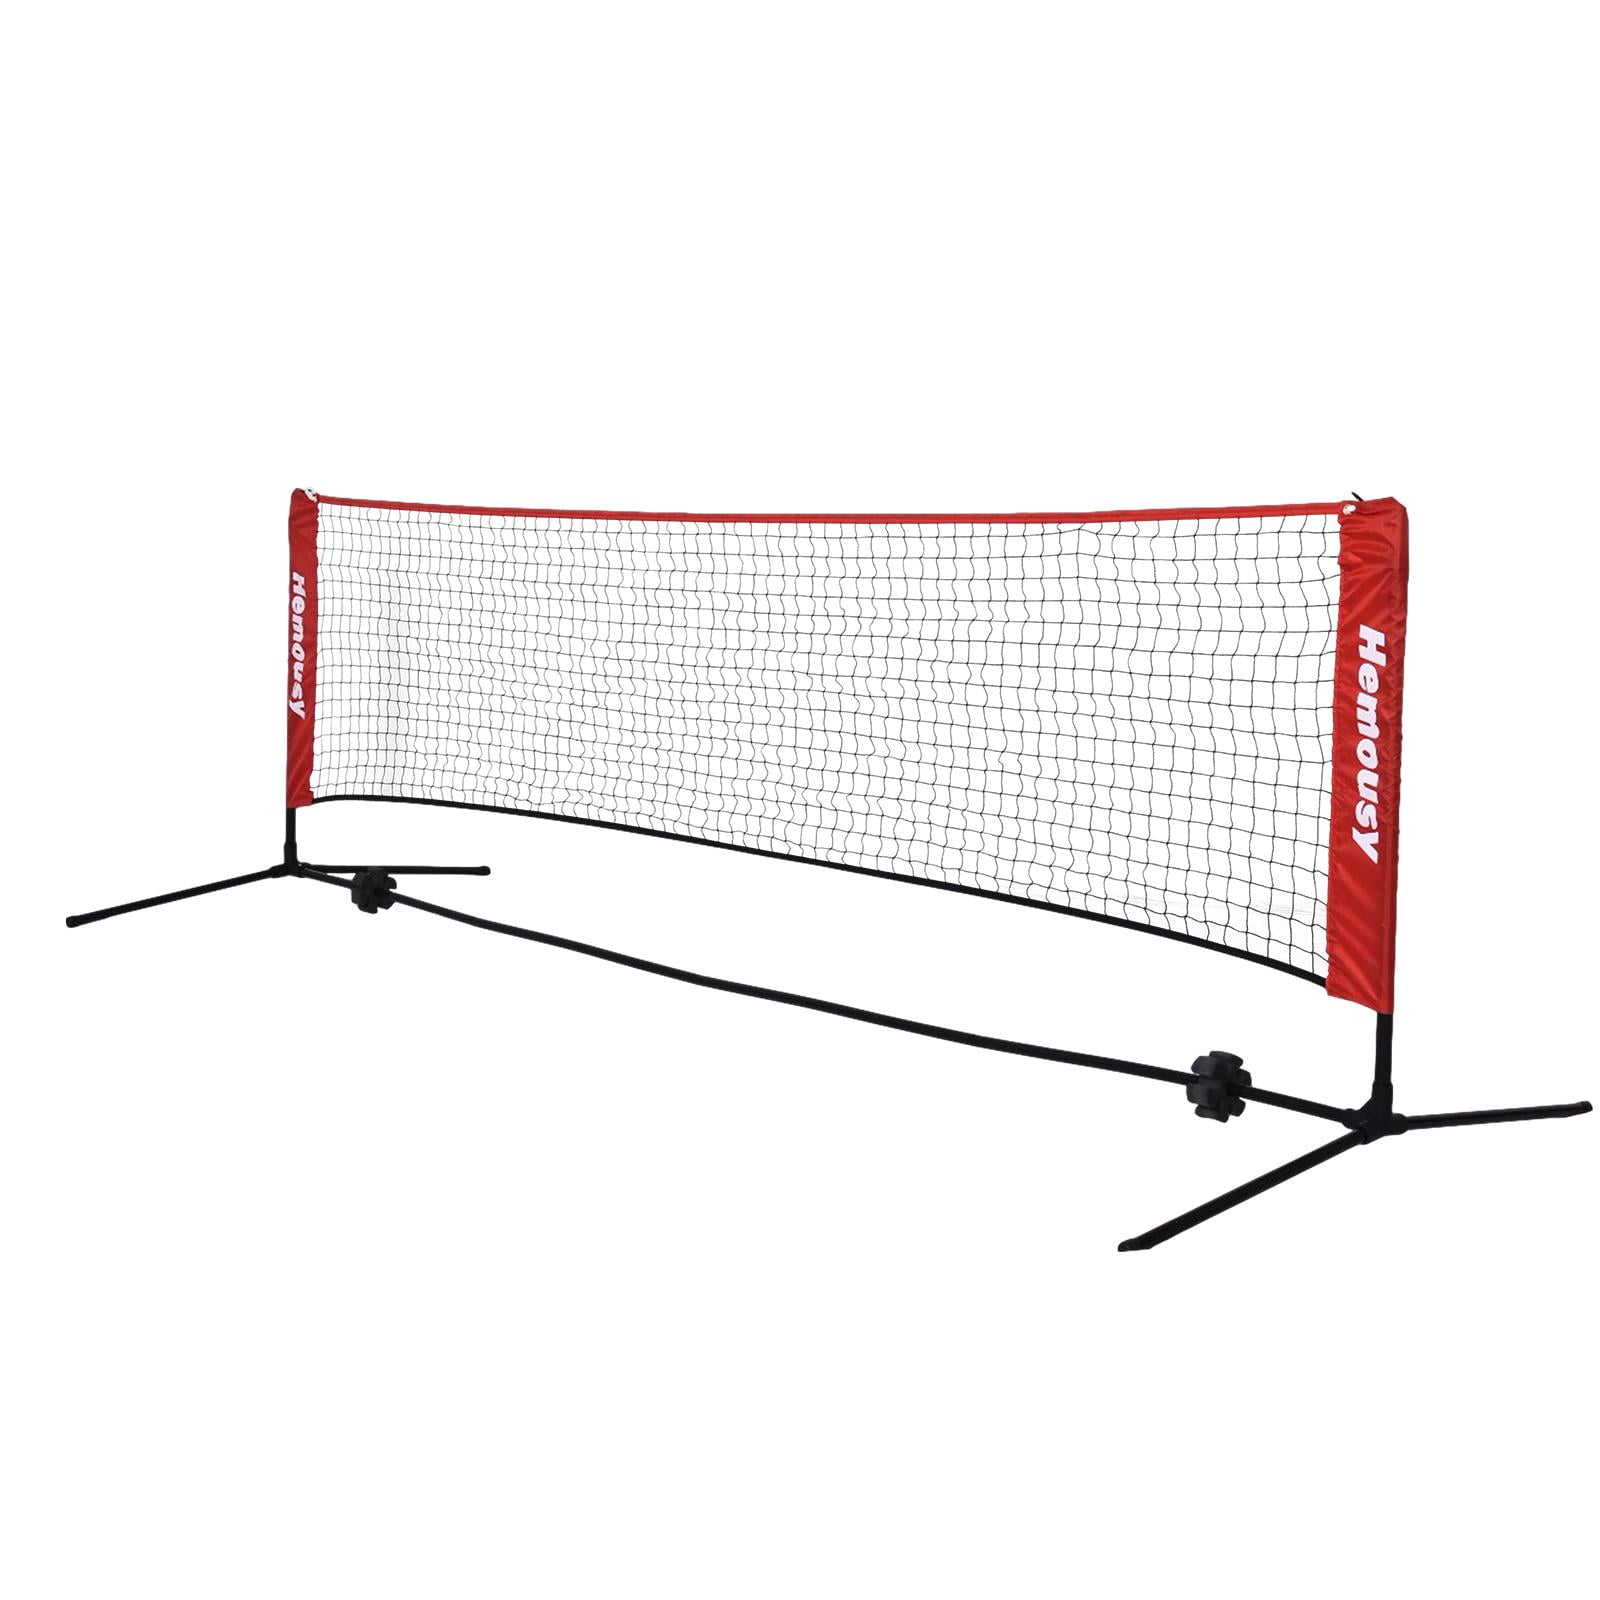 PowerNet Portable Badminton Tennis Volleyball Pickleball Net Adjustable Height 